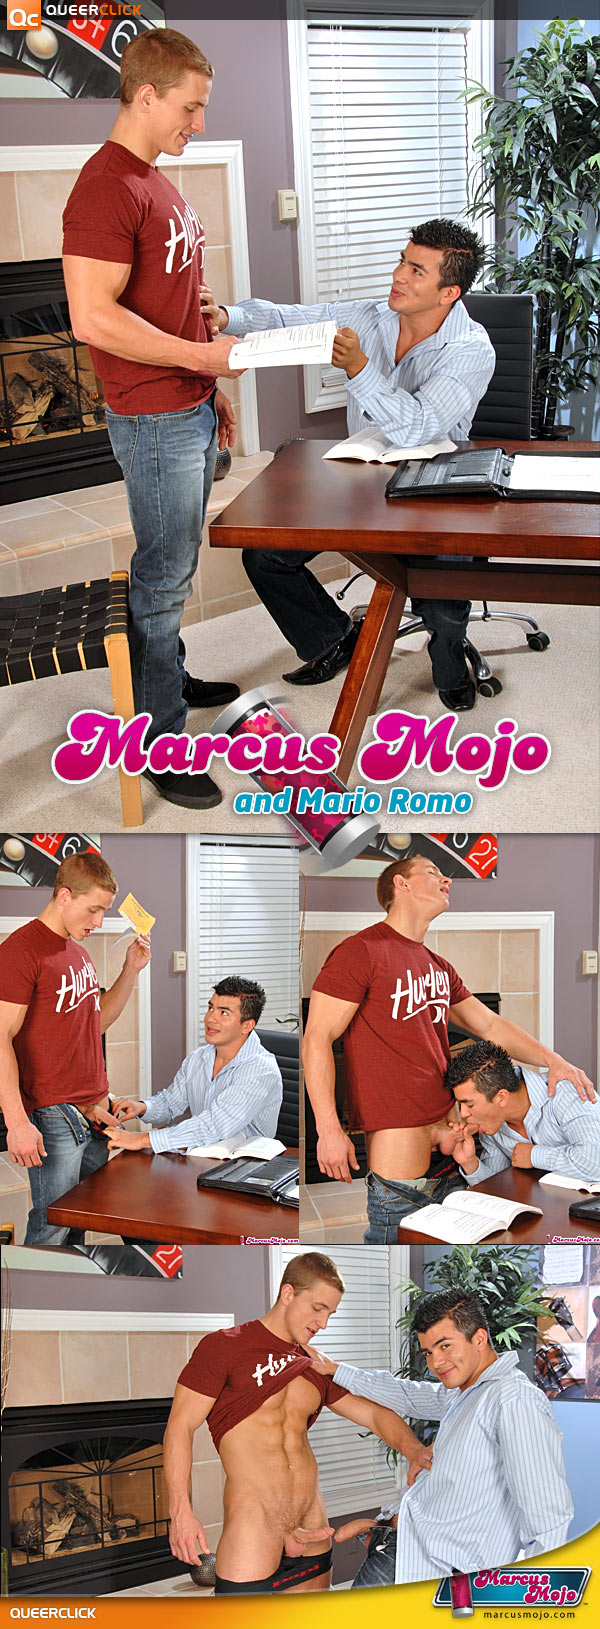 Marus Mojo: Marcus and Mario Romo